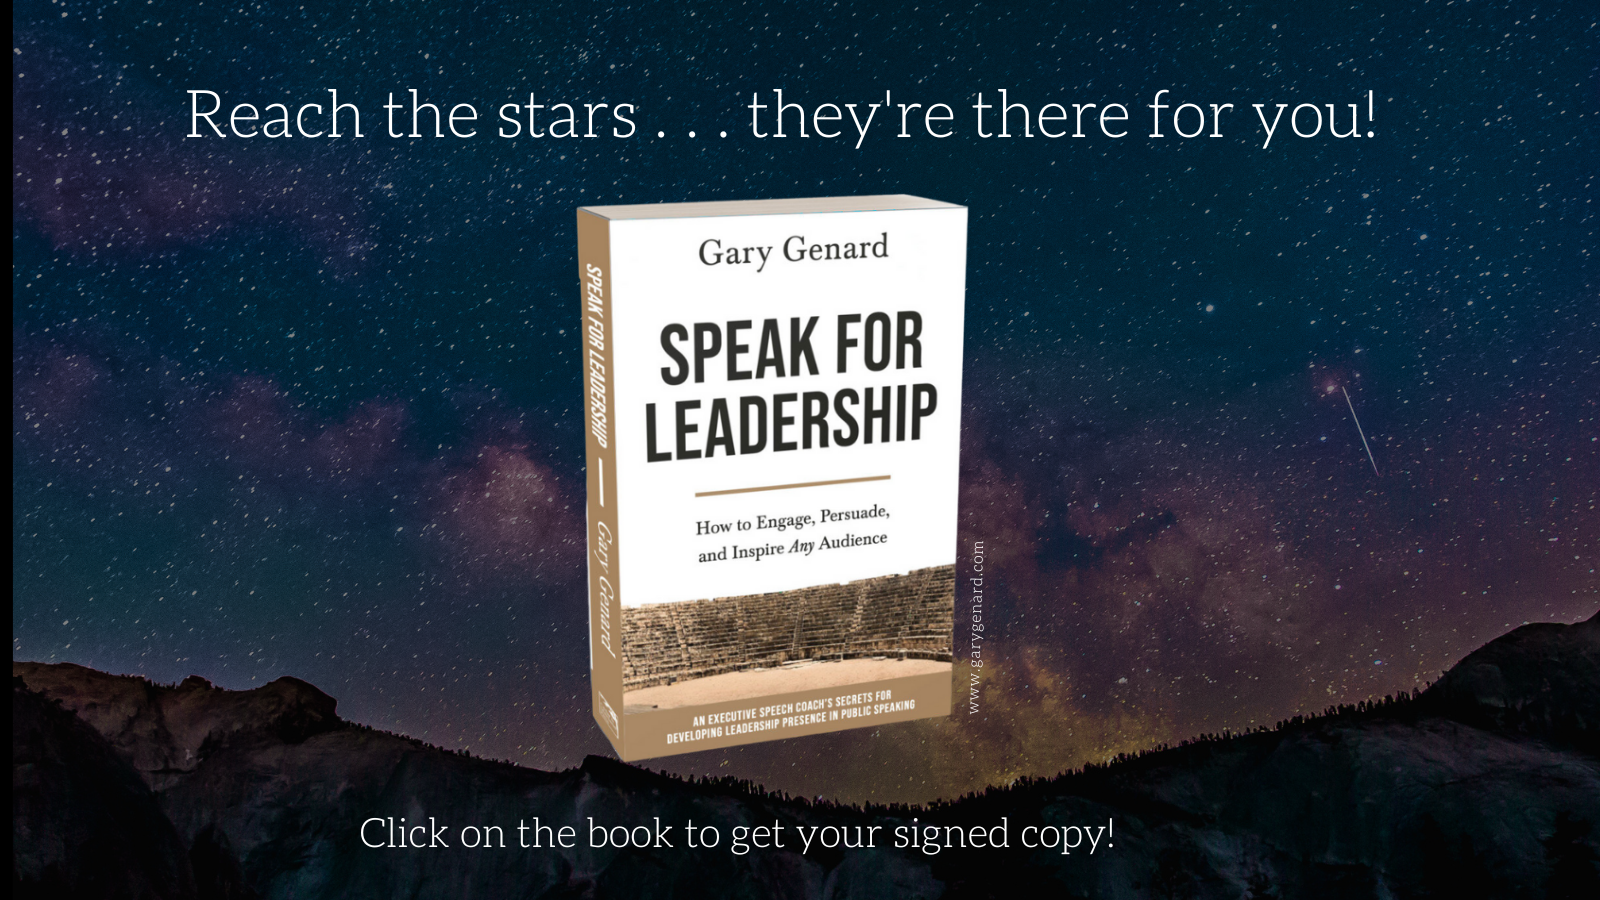 Speak for Leadership - Dr. Gary Genard's book on developing leadership presence.